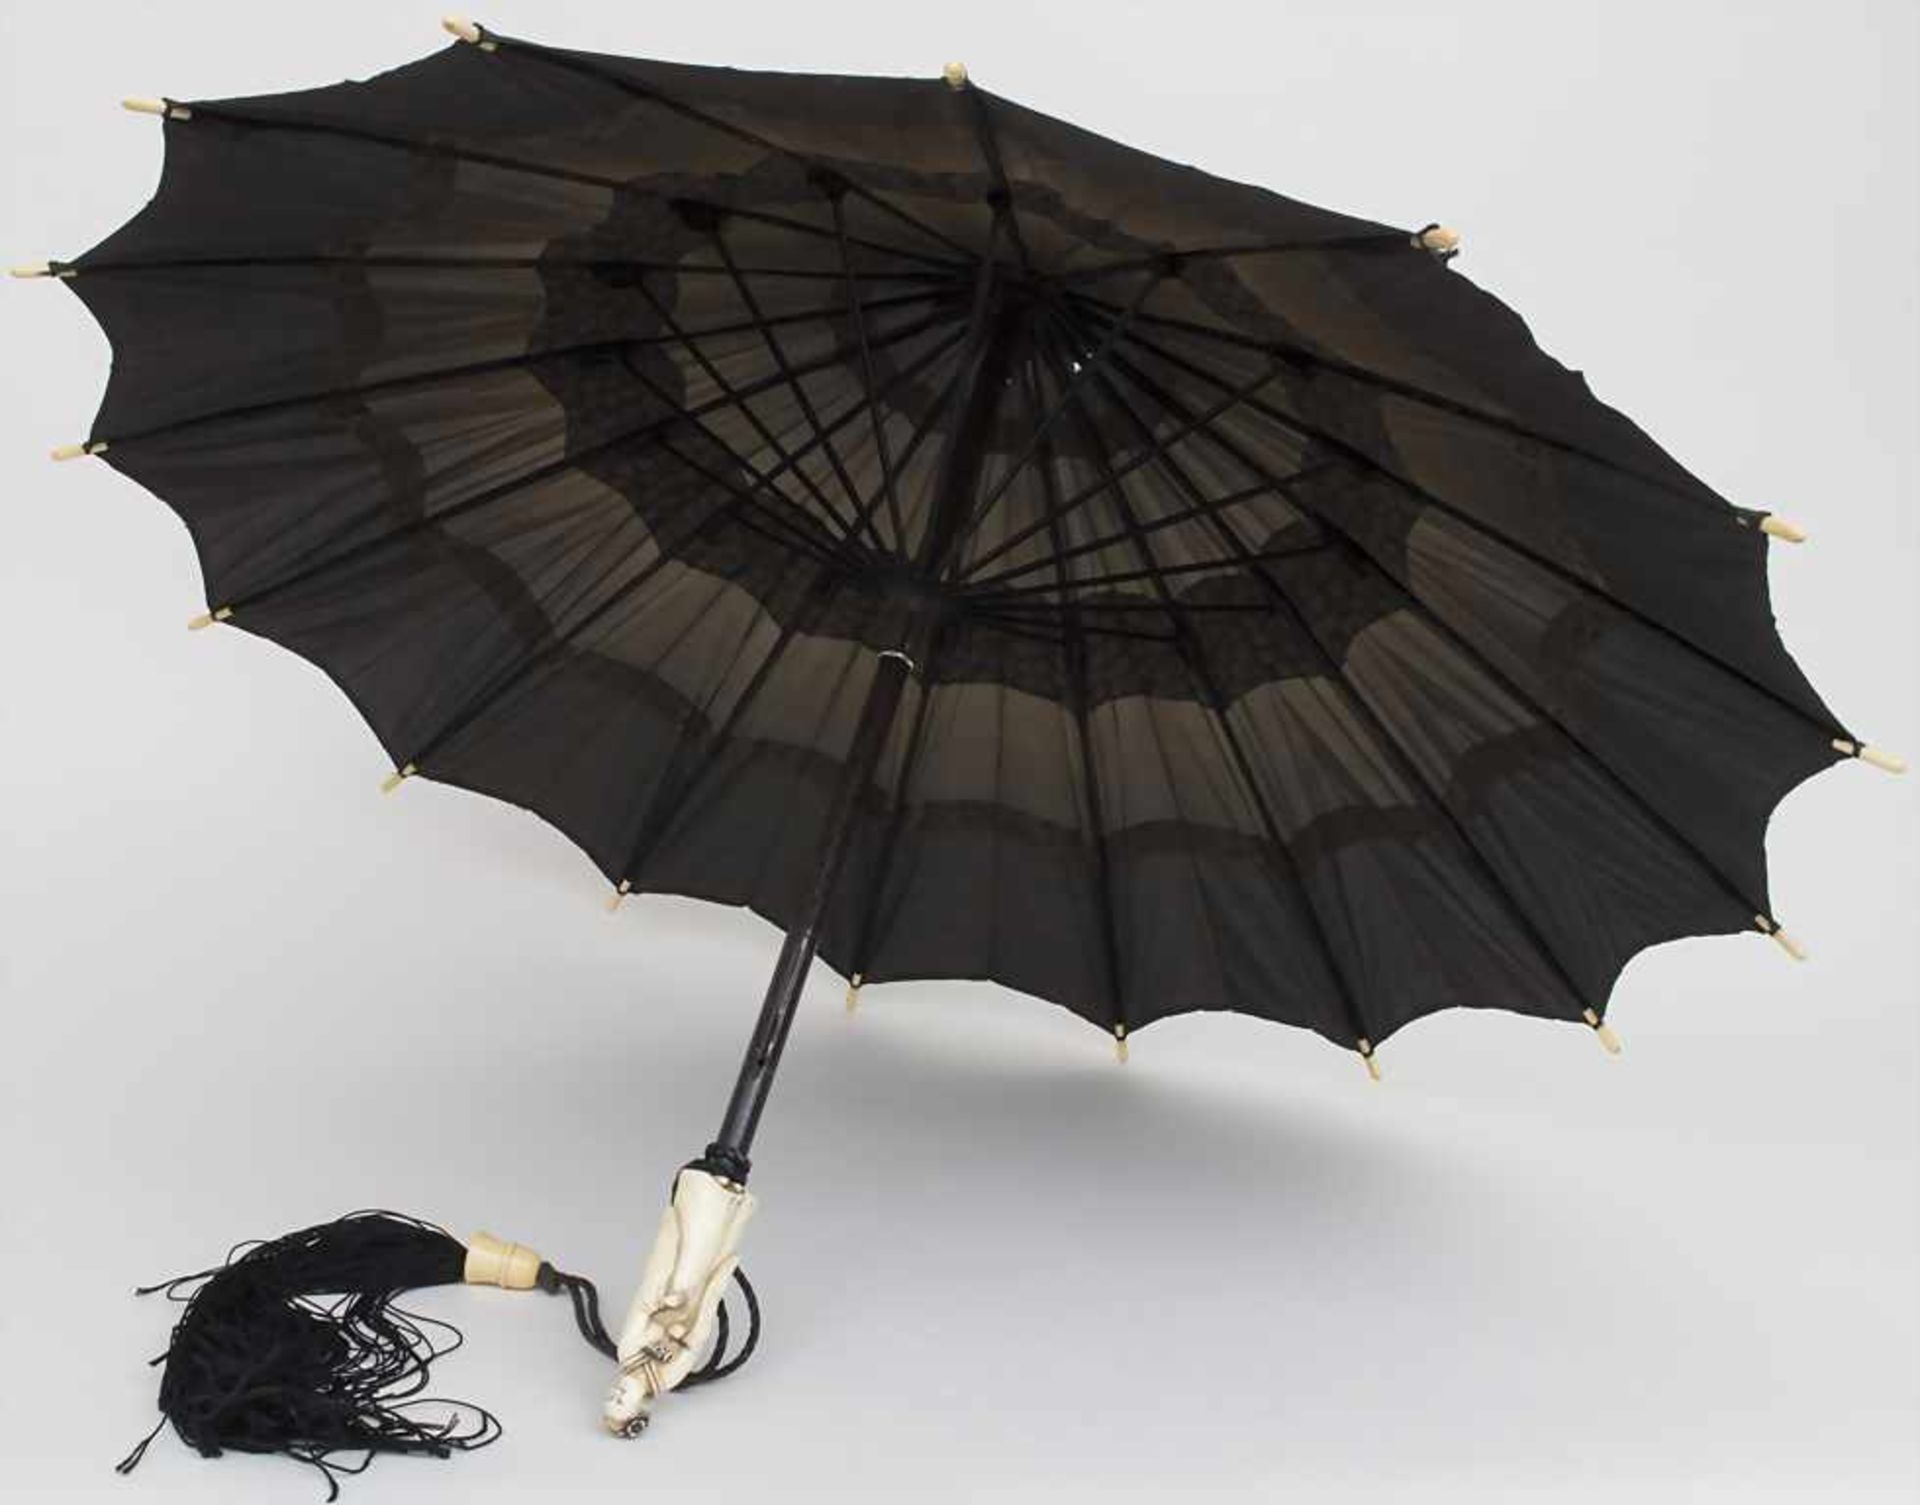 Sonnenschirm / A parasol with Okimono, Japan, Meiji-Periode, Ende 19. Jh.Material: Elfenbein mit